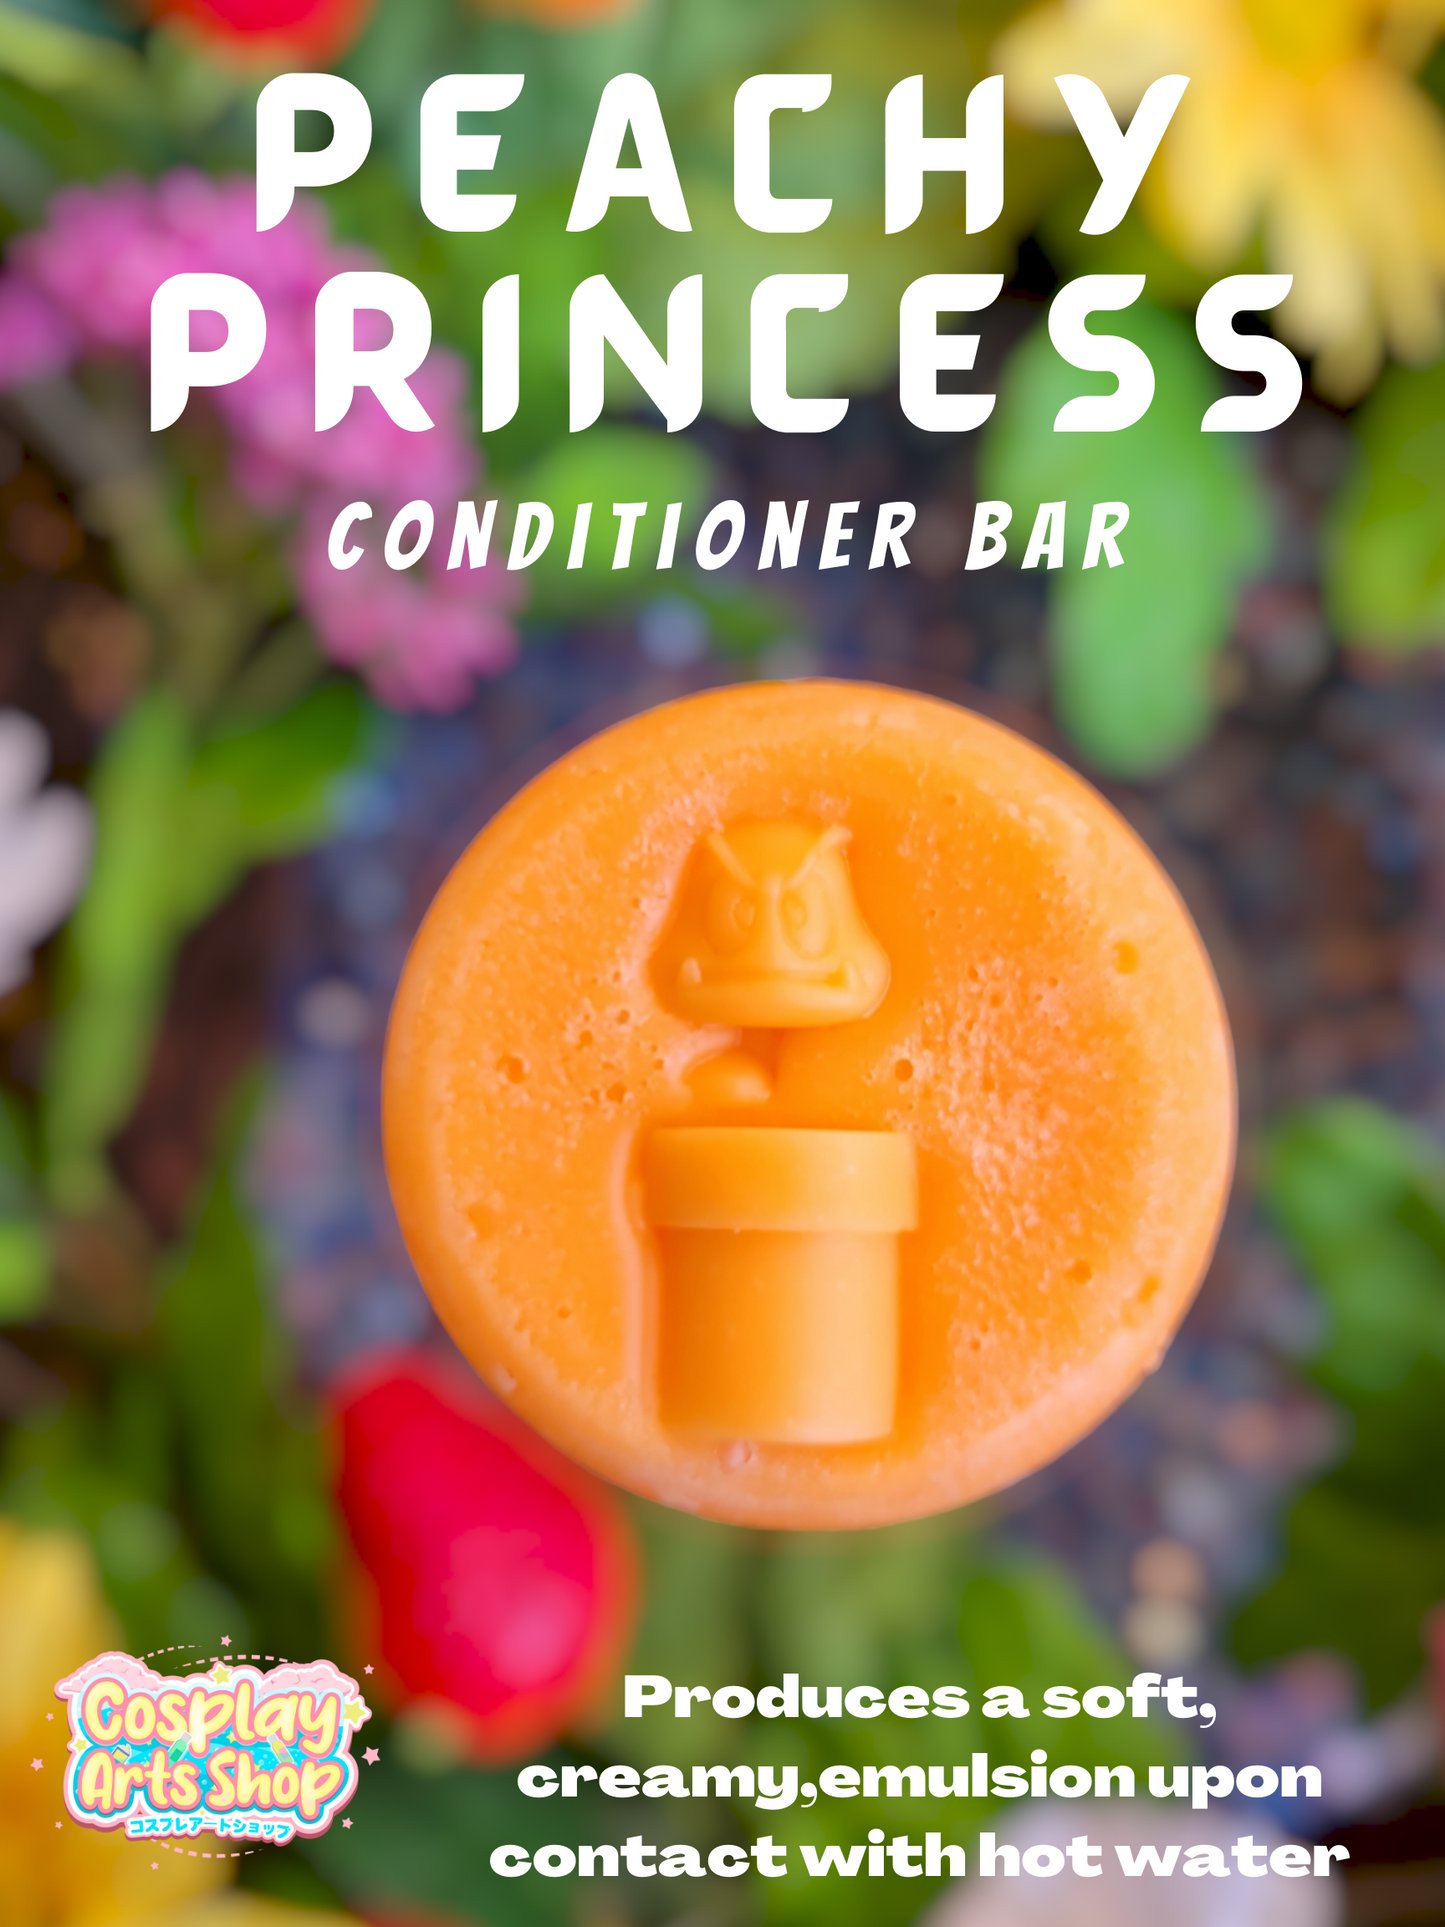 Peachy Princess Shampoo Bar - Cosplay Arts Shop